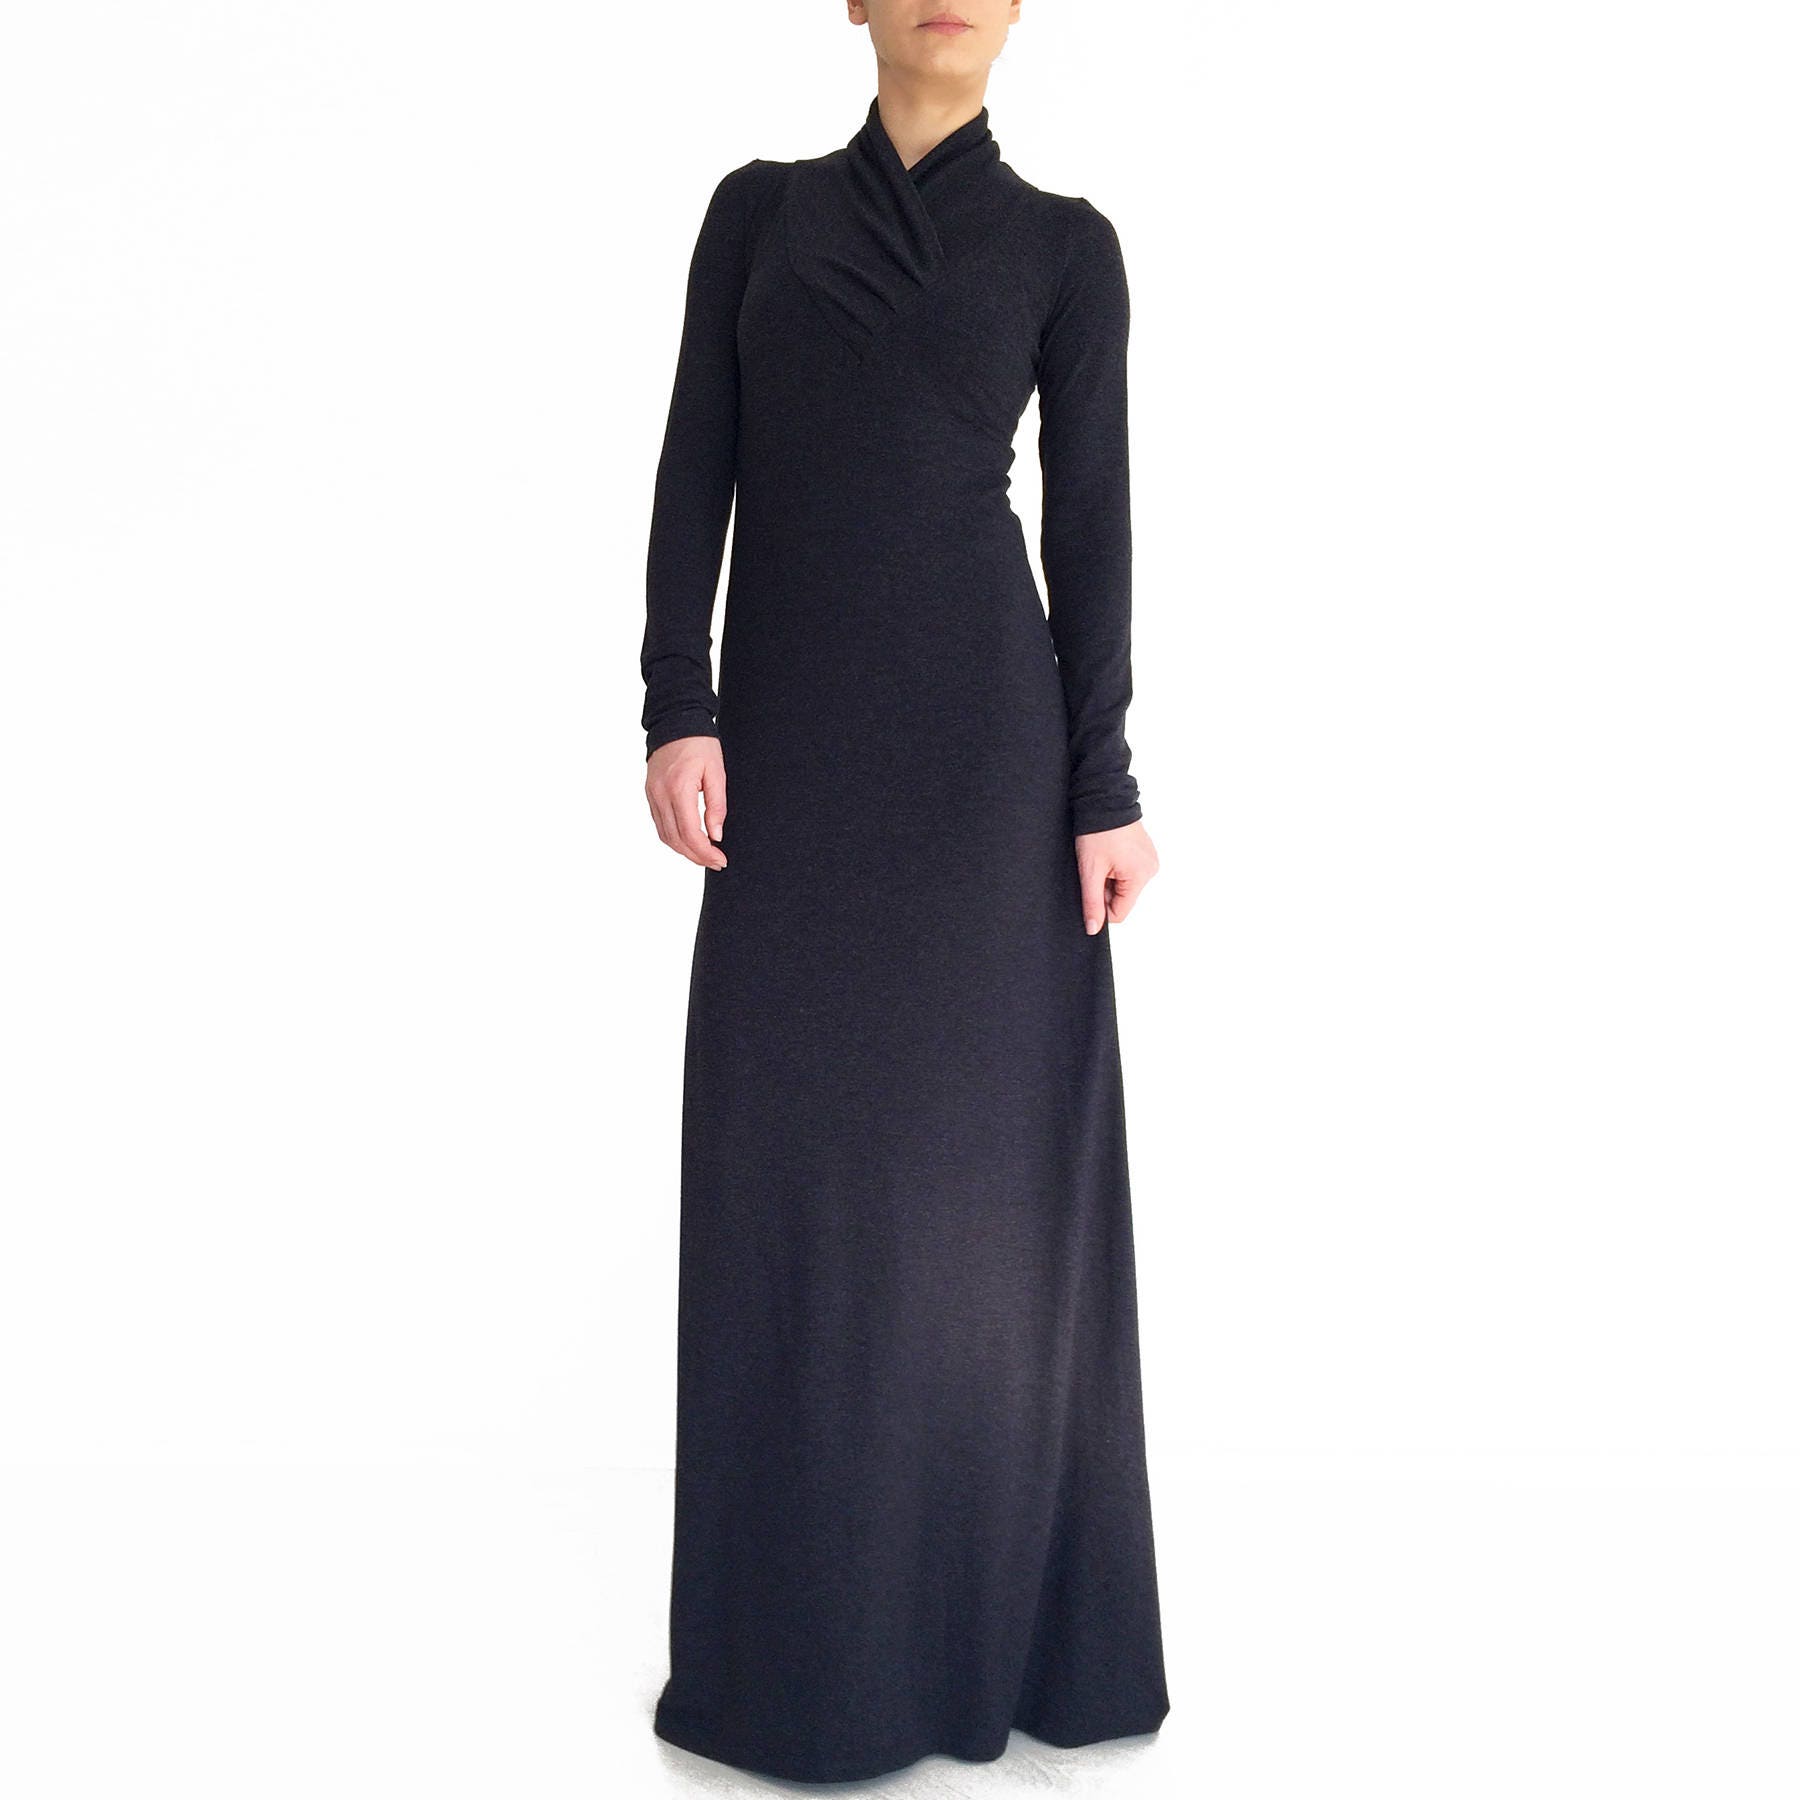 Black maxi dress/ Long sleeve dress/ Minimalistic maxi dress/ | Etsy